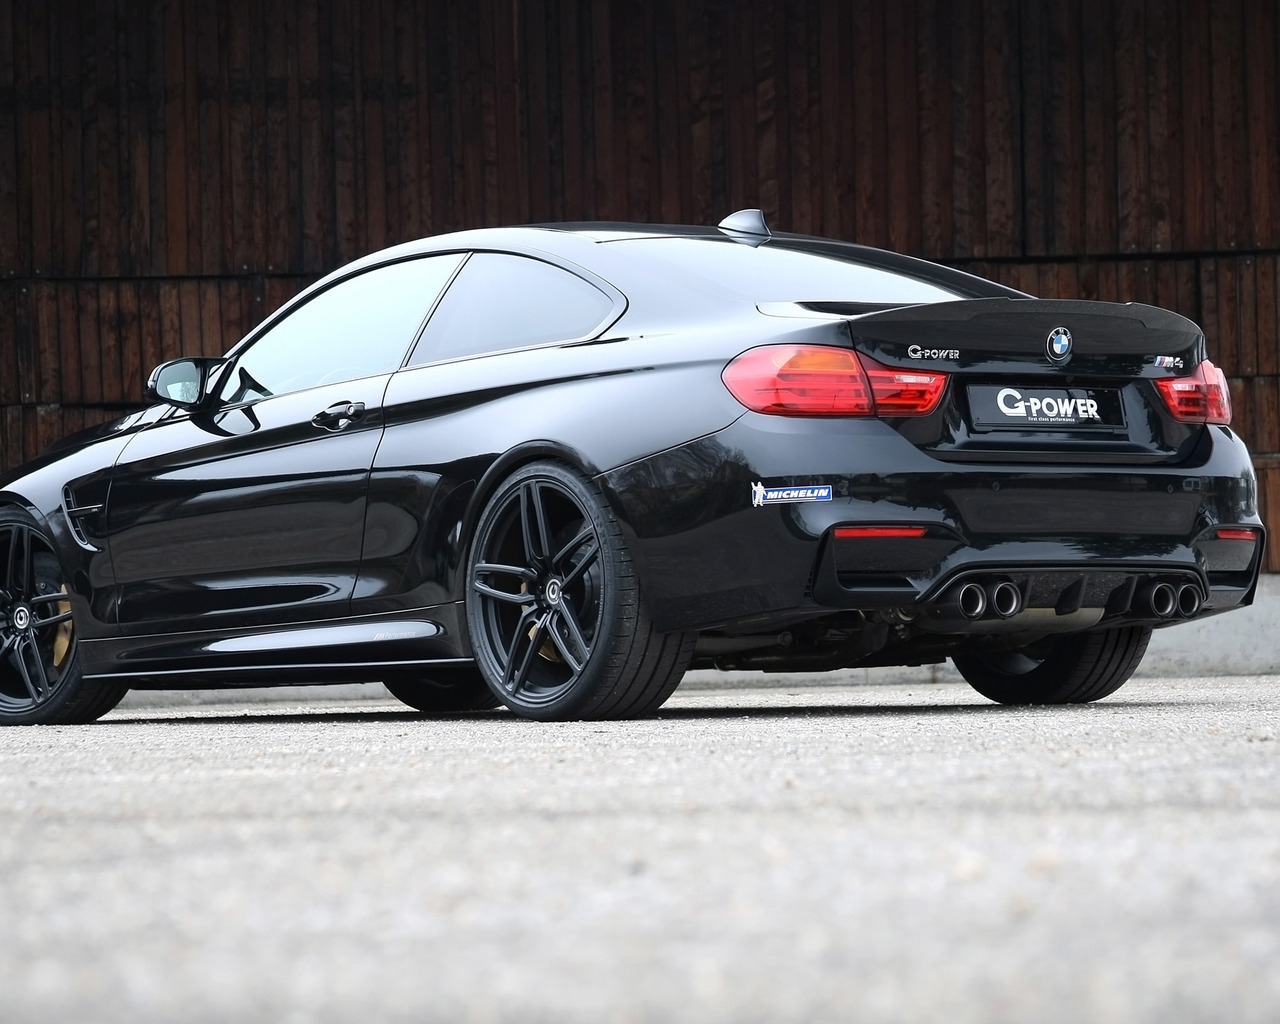 Black BMW M4 G-Power 2014 Rear for 1280 x 1024 resolution